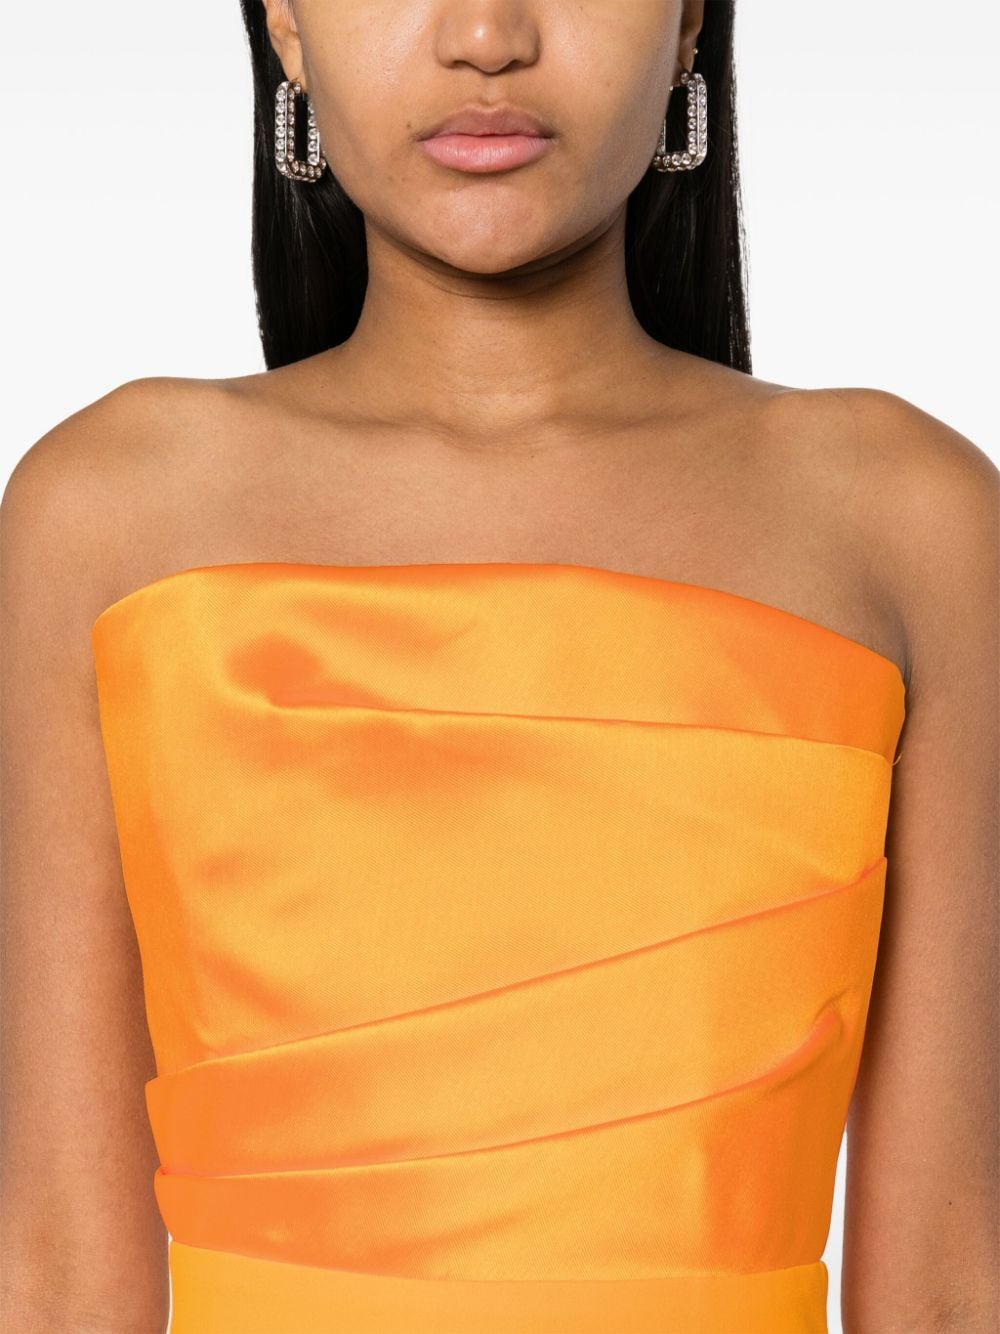 Solace London Dresses Orange